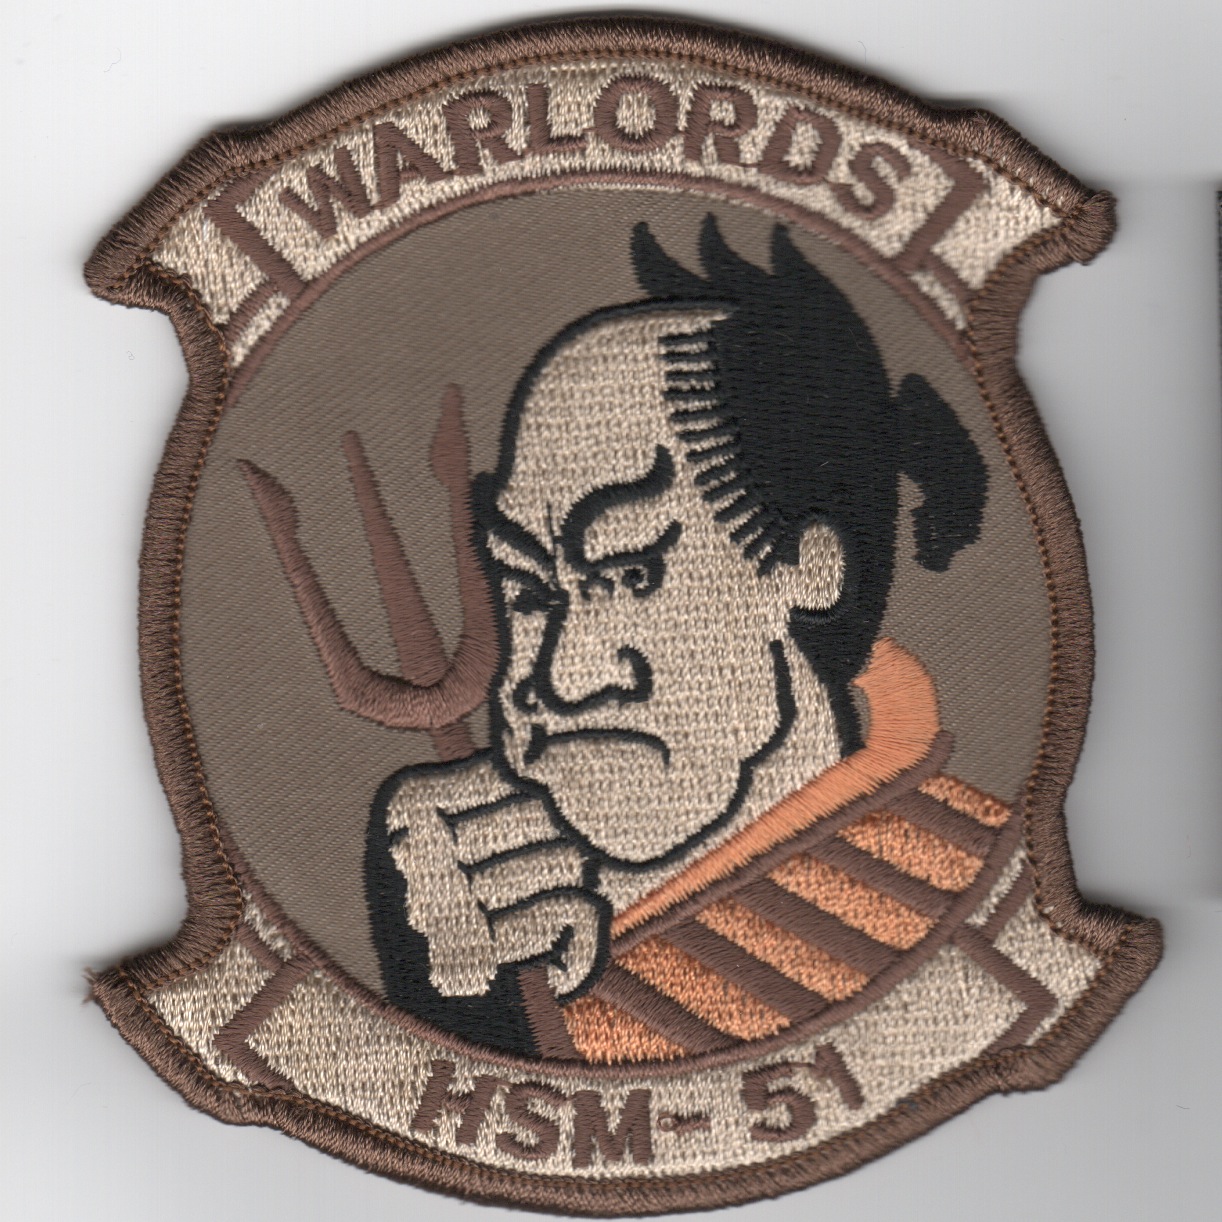 HSM-51 'Warlords' Squadron Patch (Des)